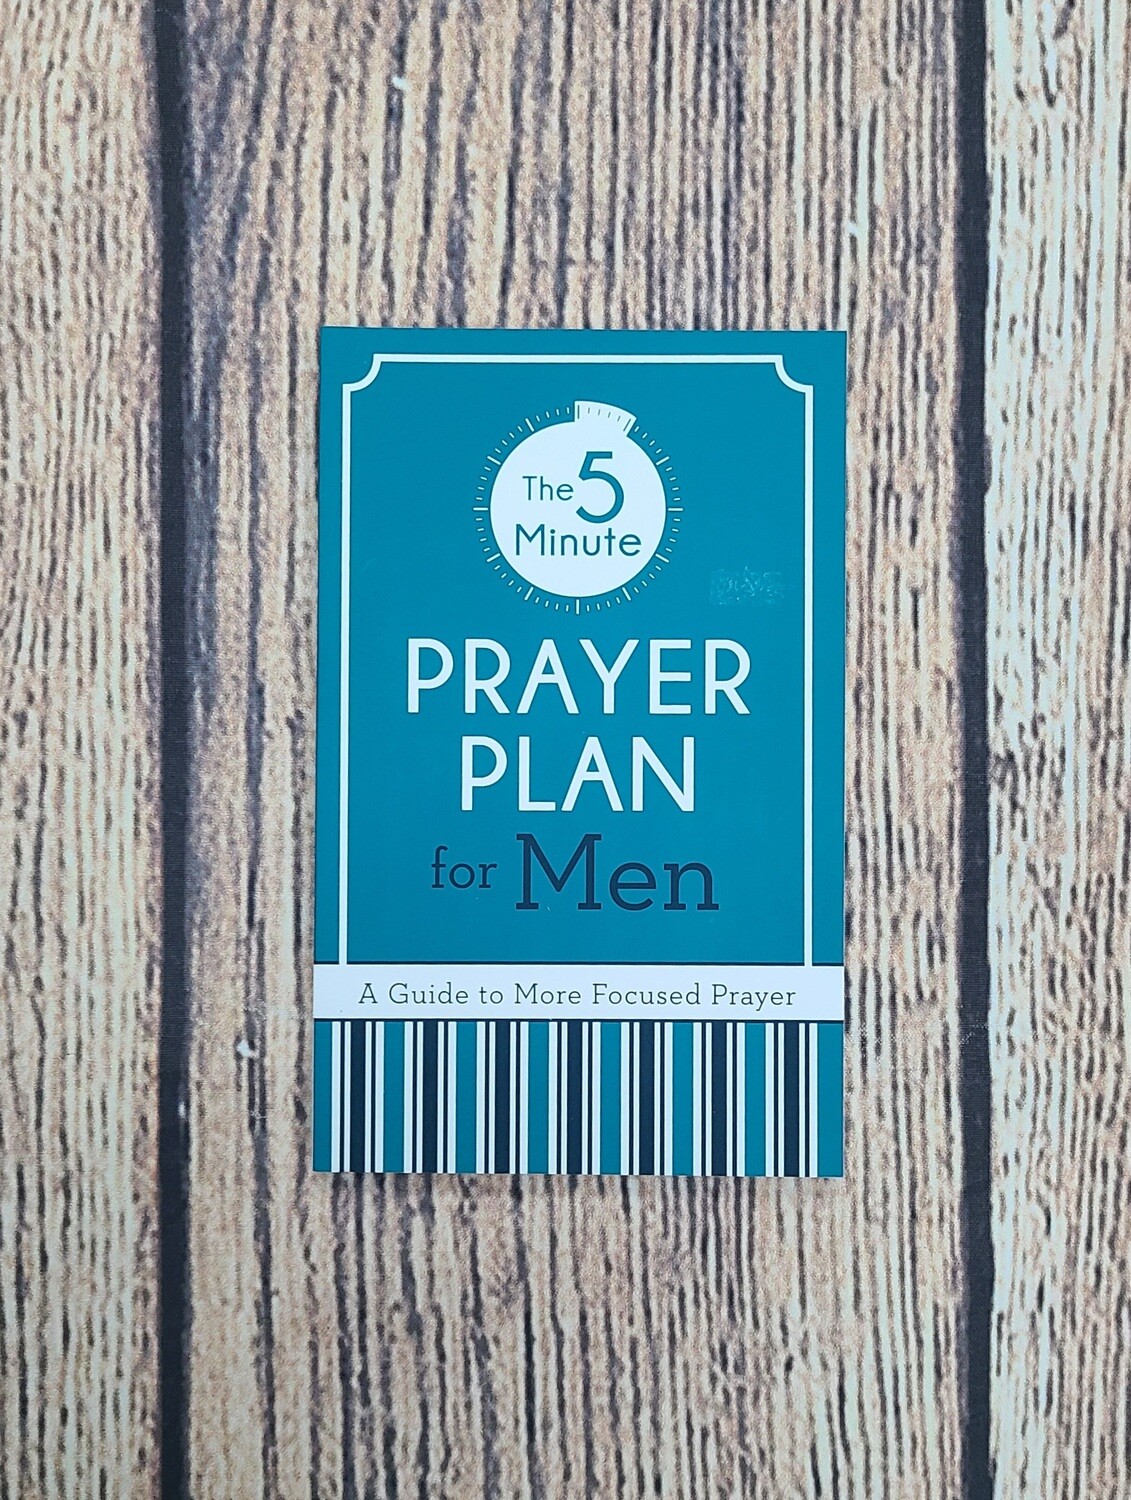 The 5-Minute Prayer Plan for Men by Ed Cyzewski